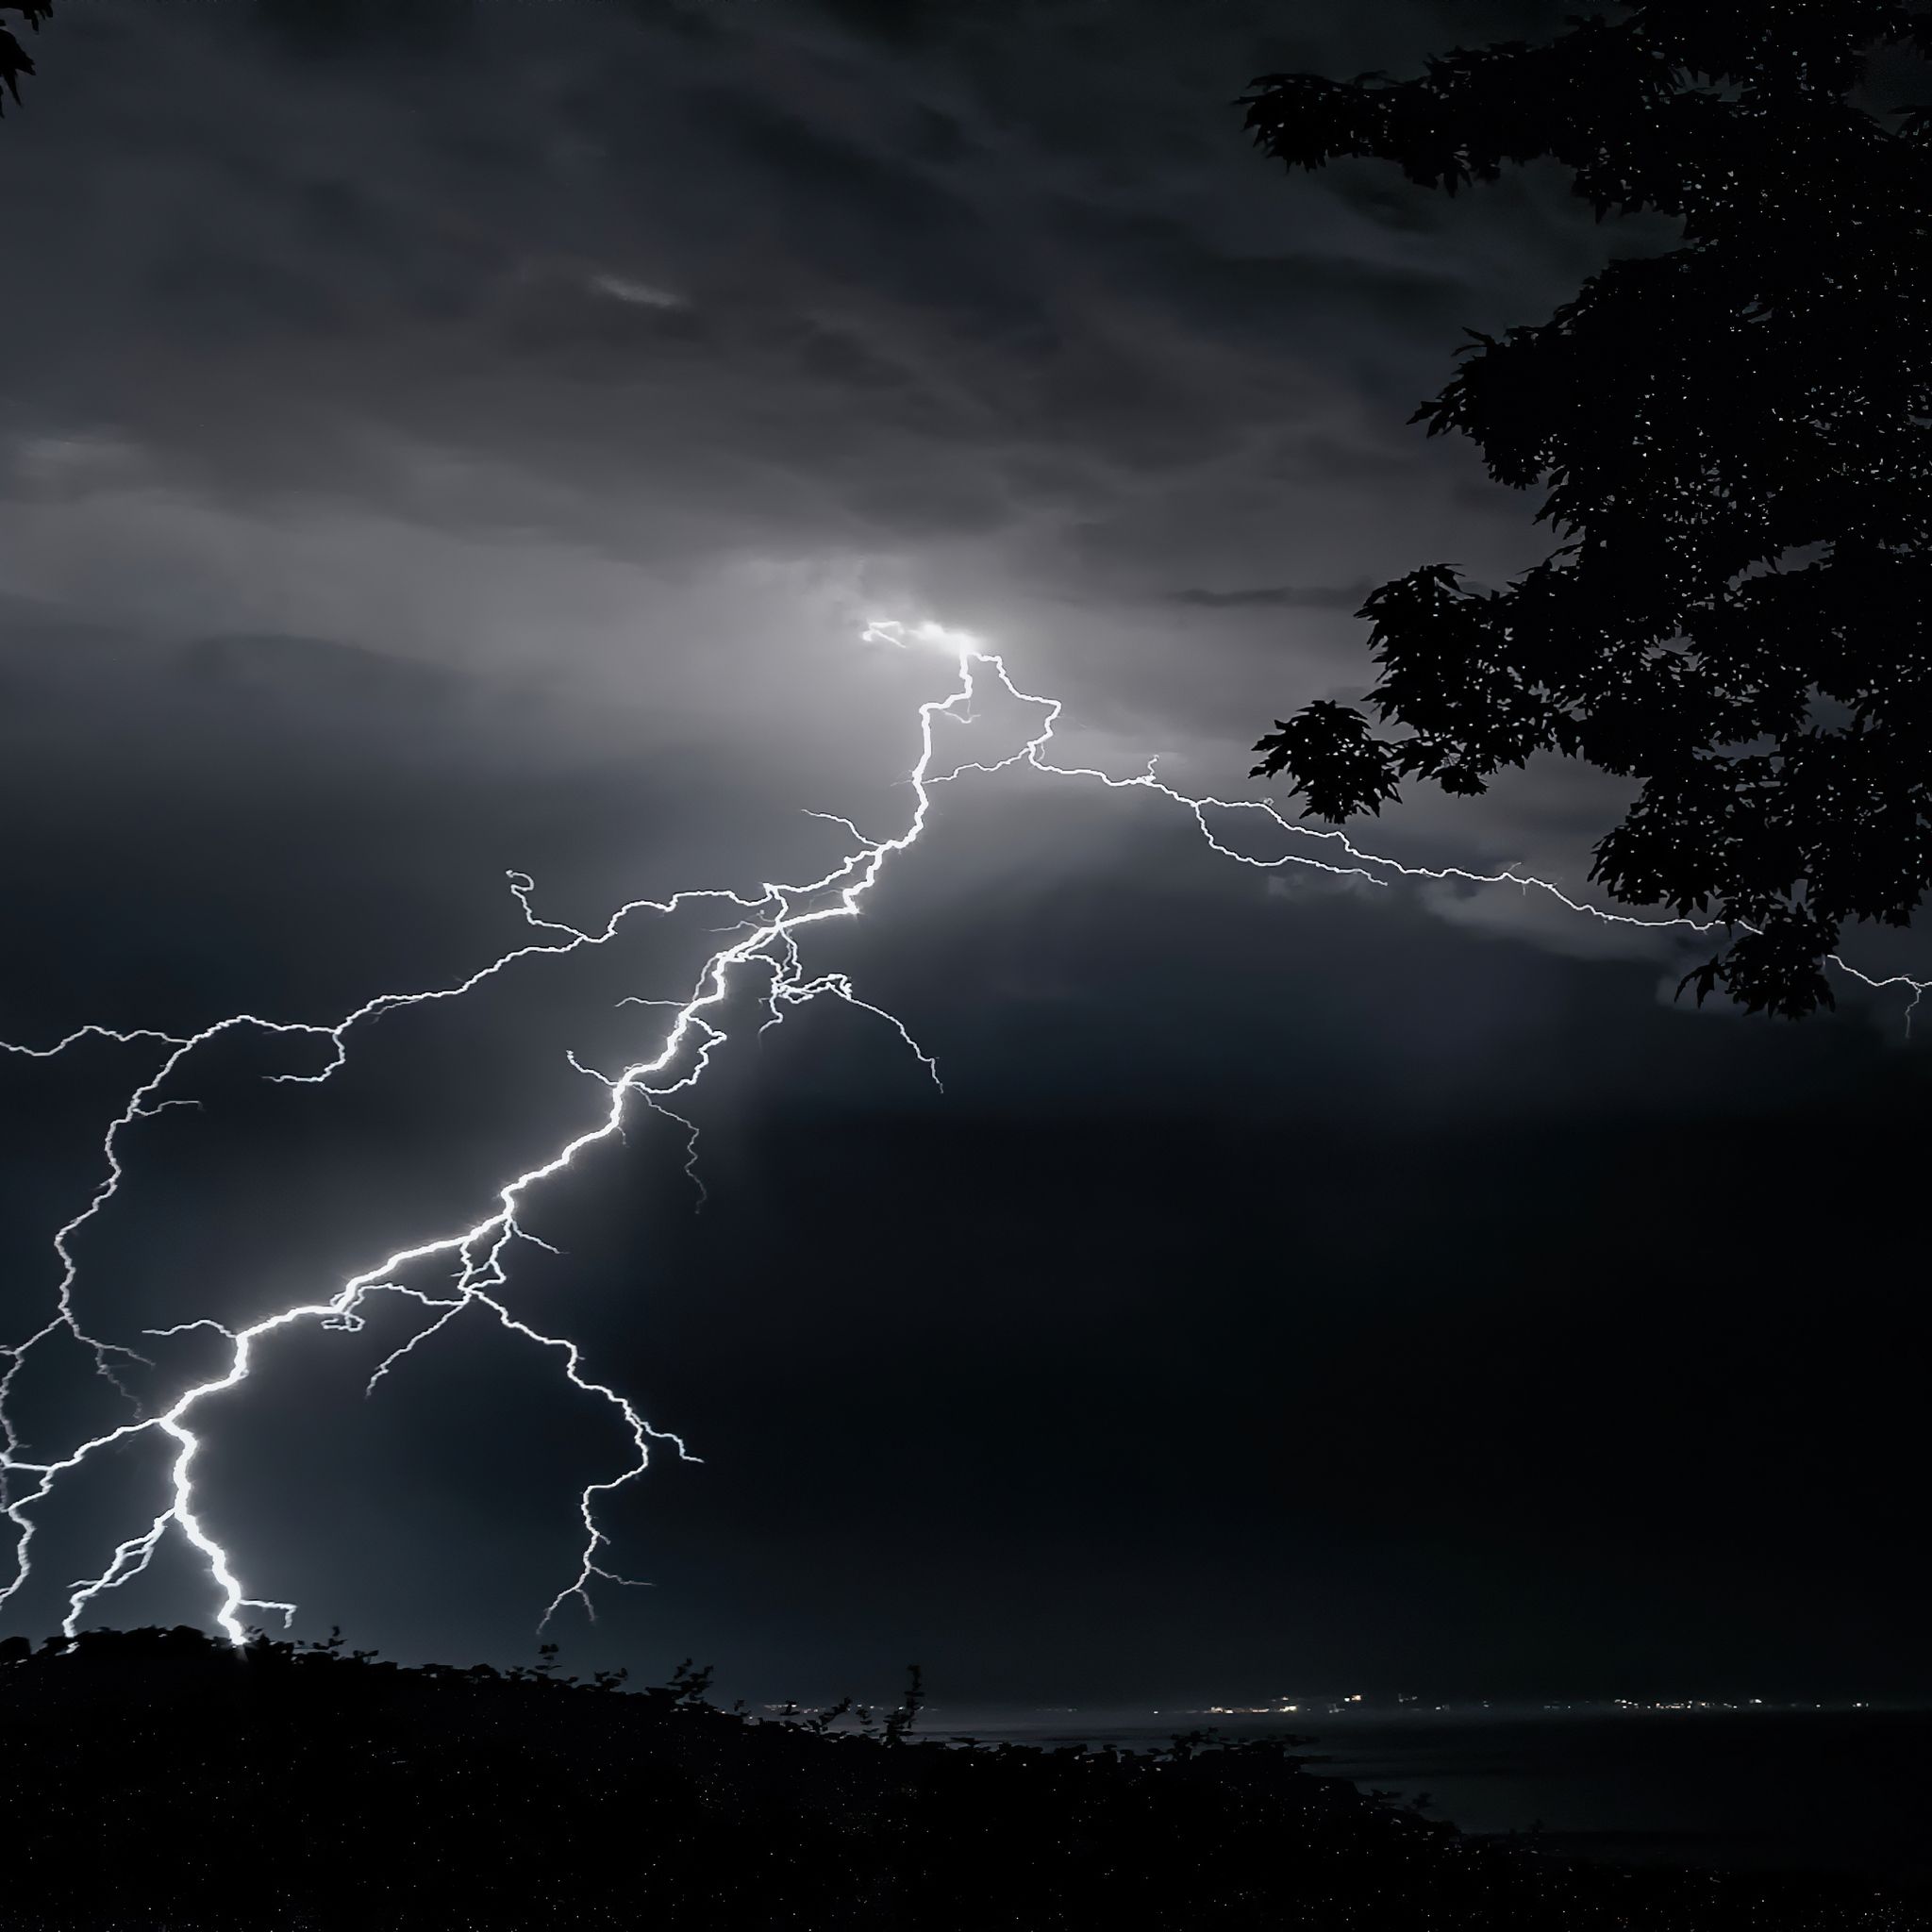 A lightning storm over a lake at night - Lightning